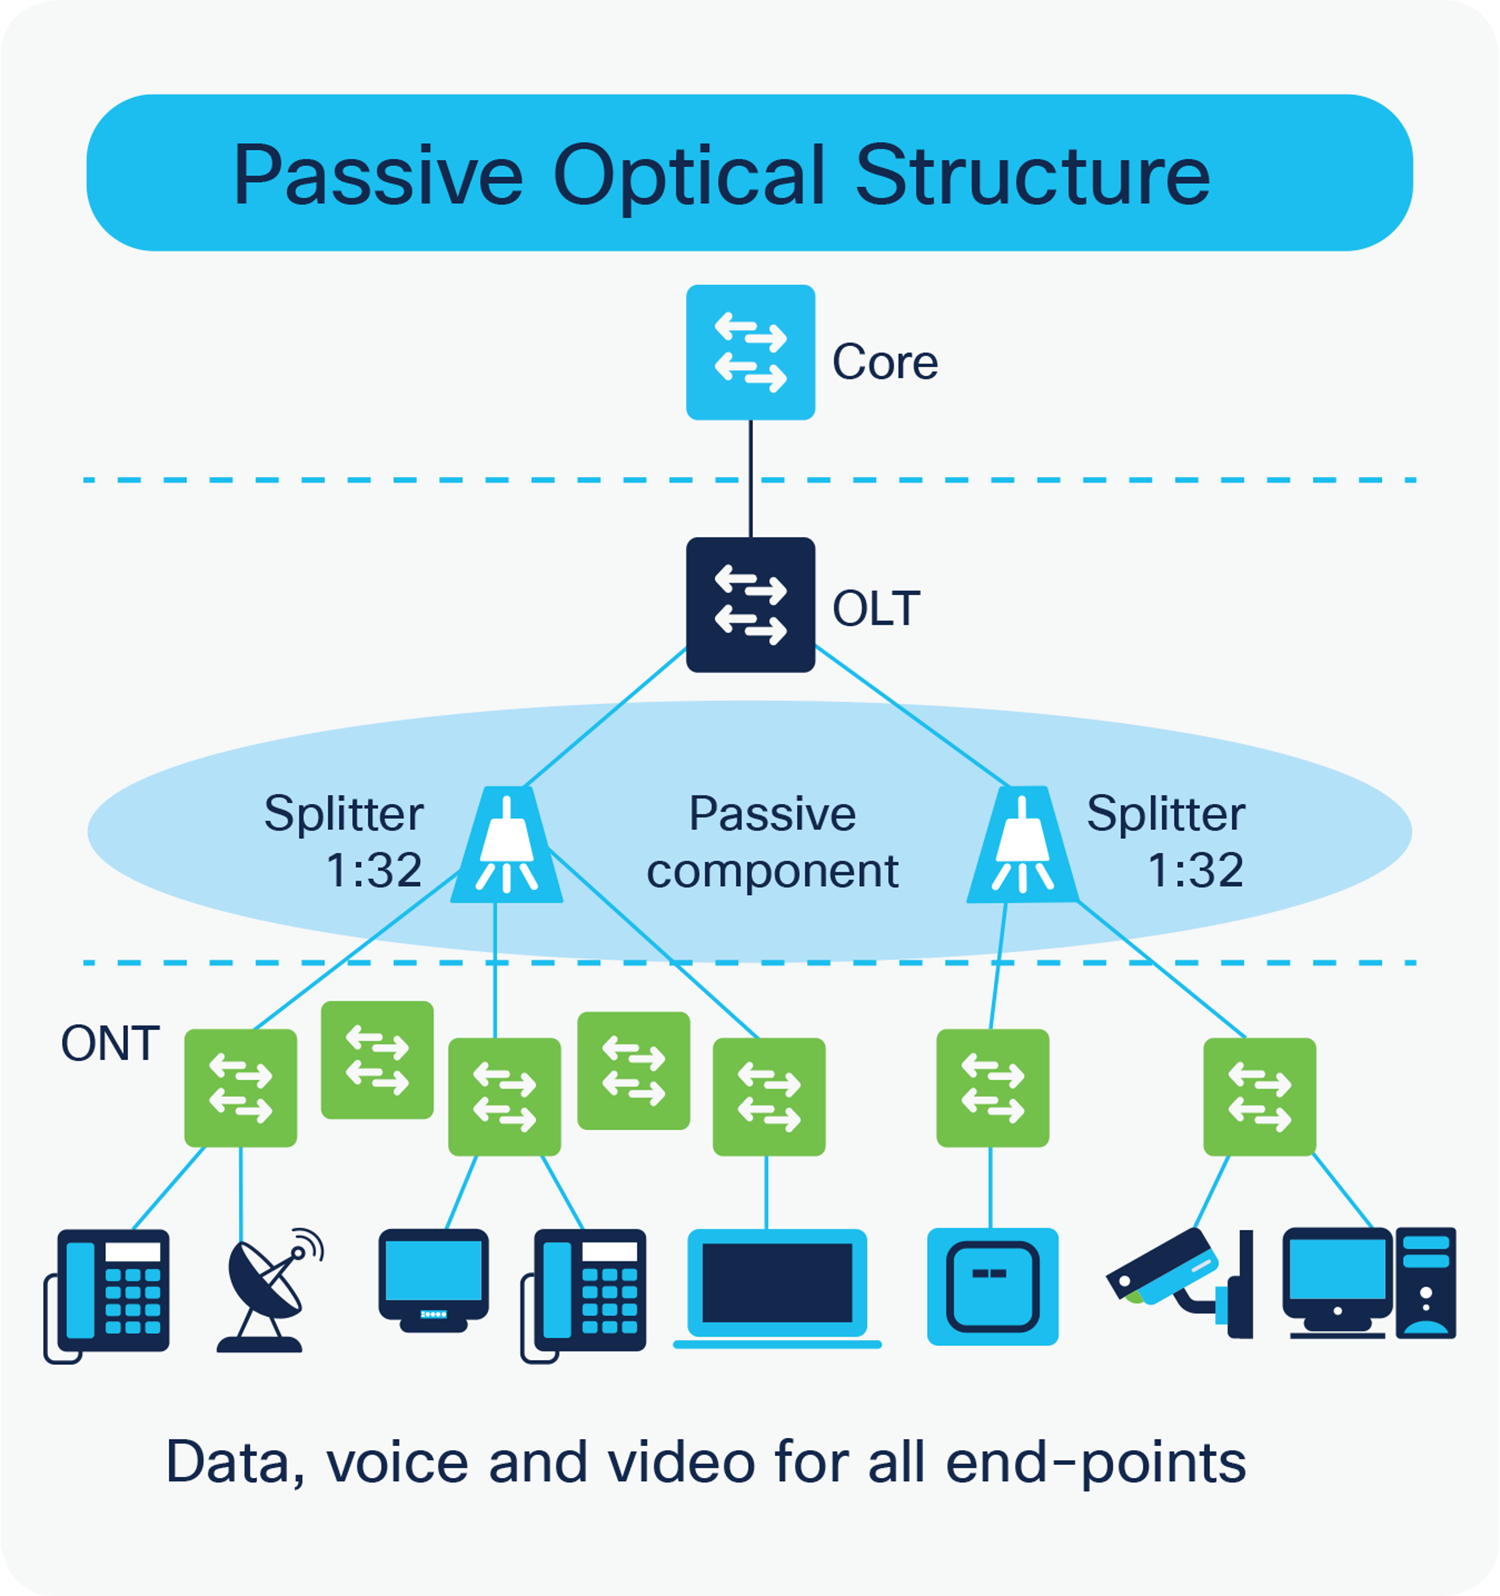 Passive Optical Structure